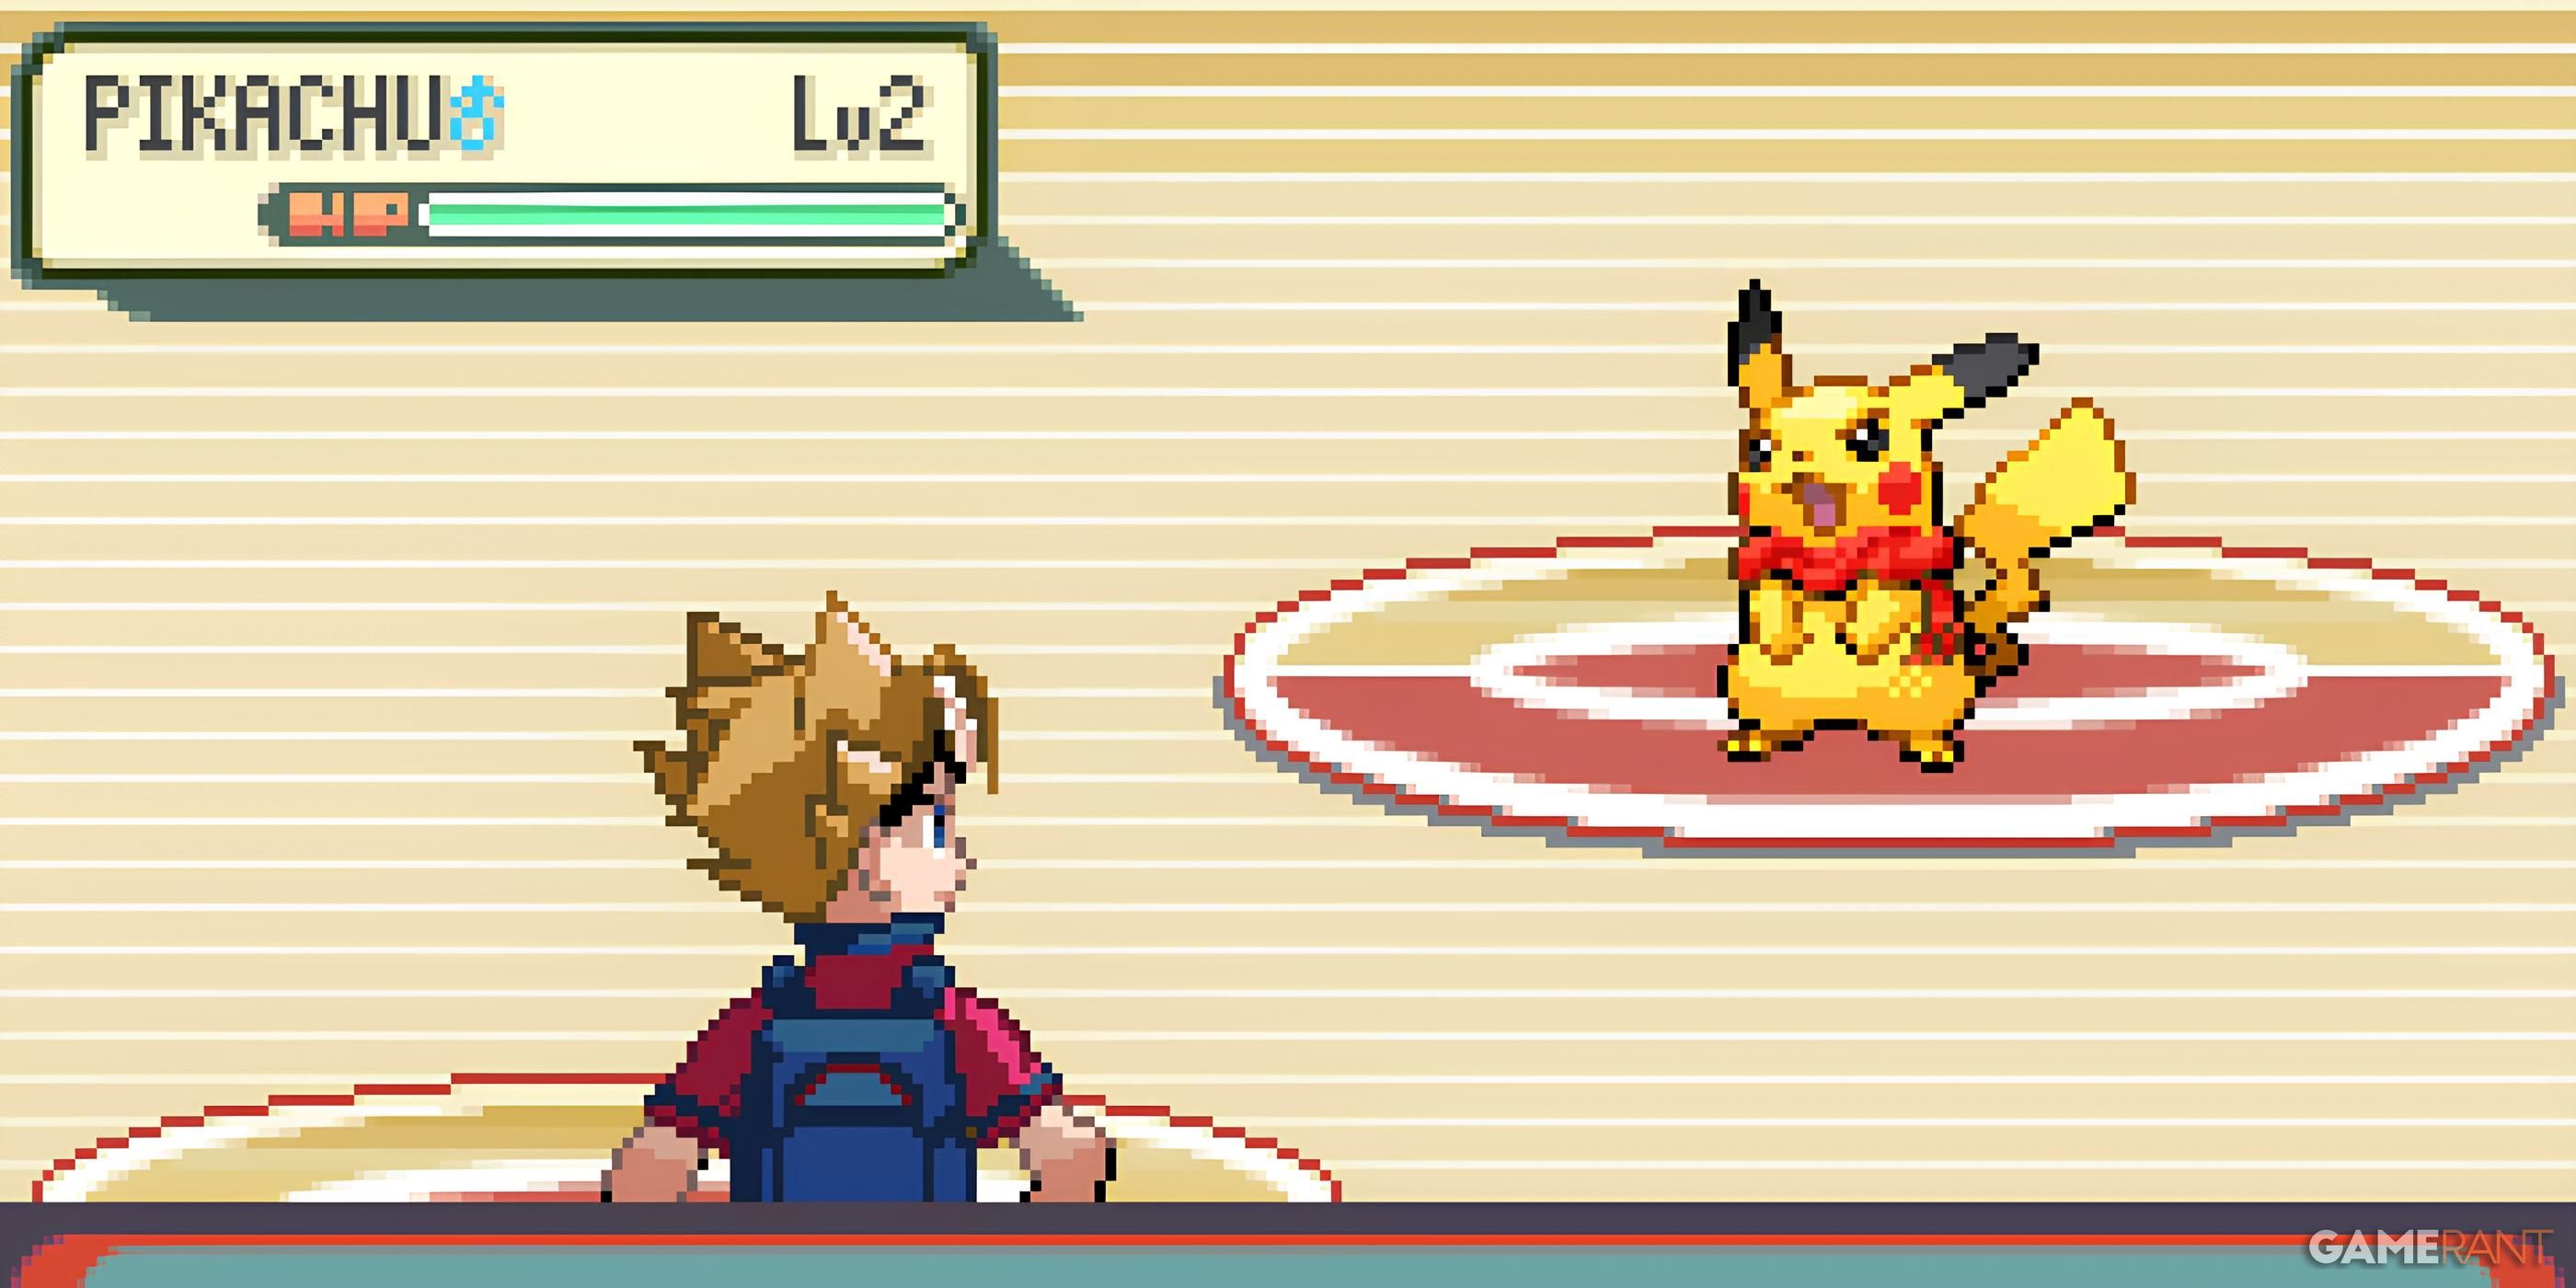 Fighting Pikachu in Pokemon Glazed